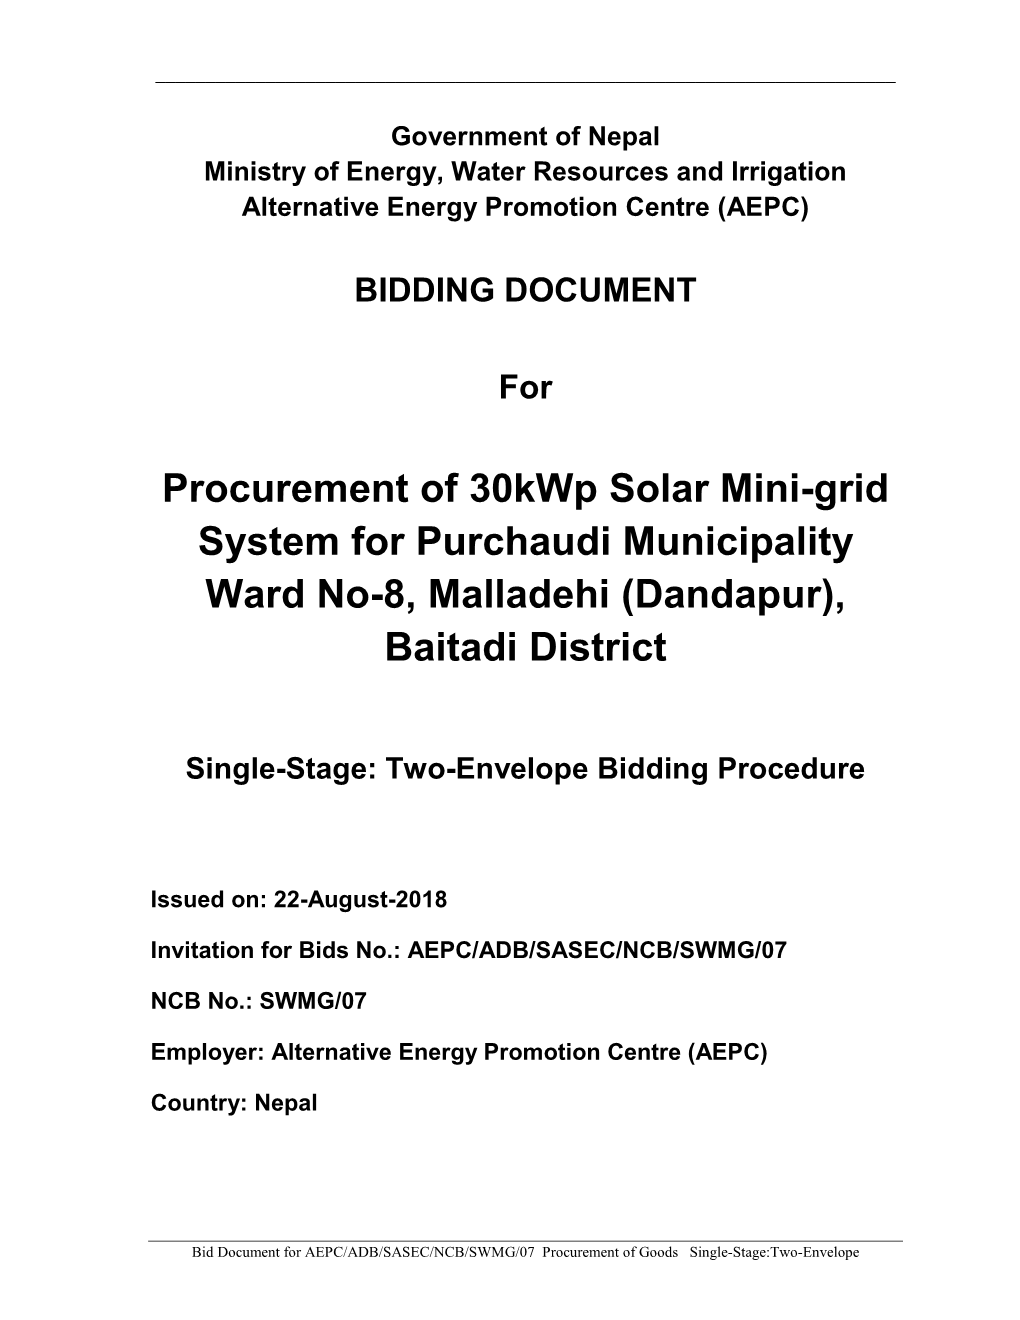 Procurement of 30Kwp Solar Mini-Grid System for Purchaudi Municipality Ward No-8, Malladehi (Dandapur), Baitadi District